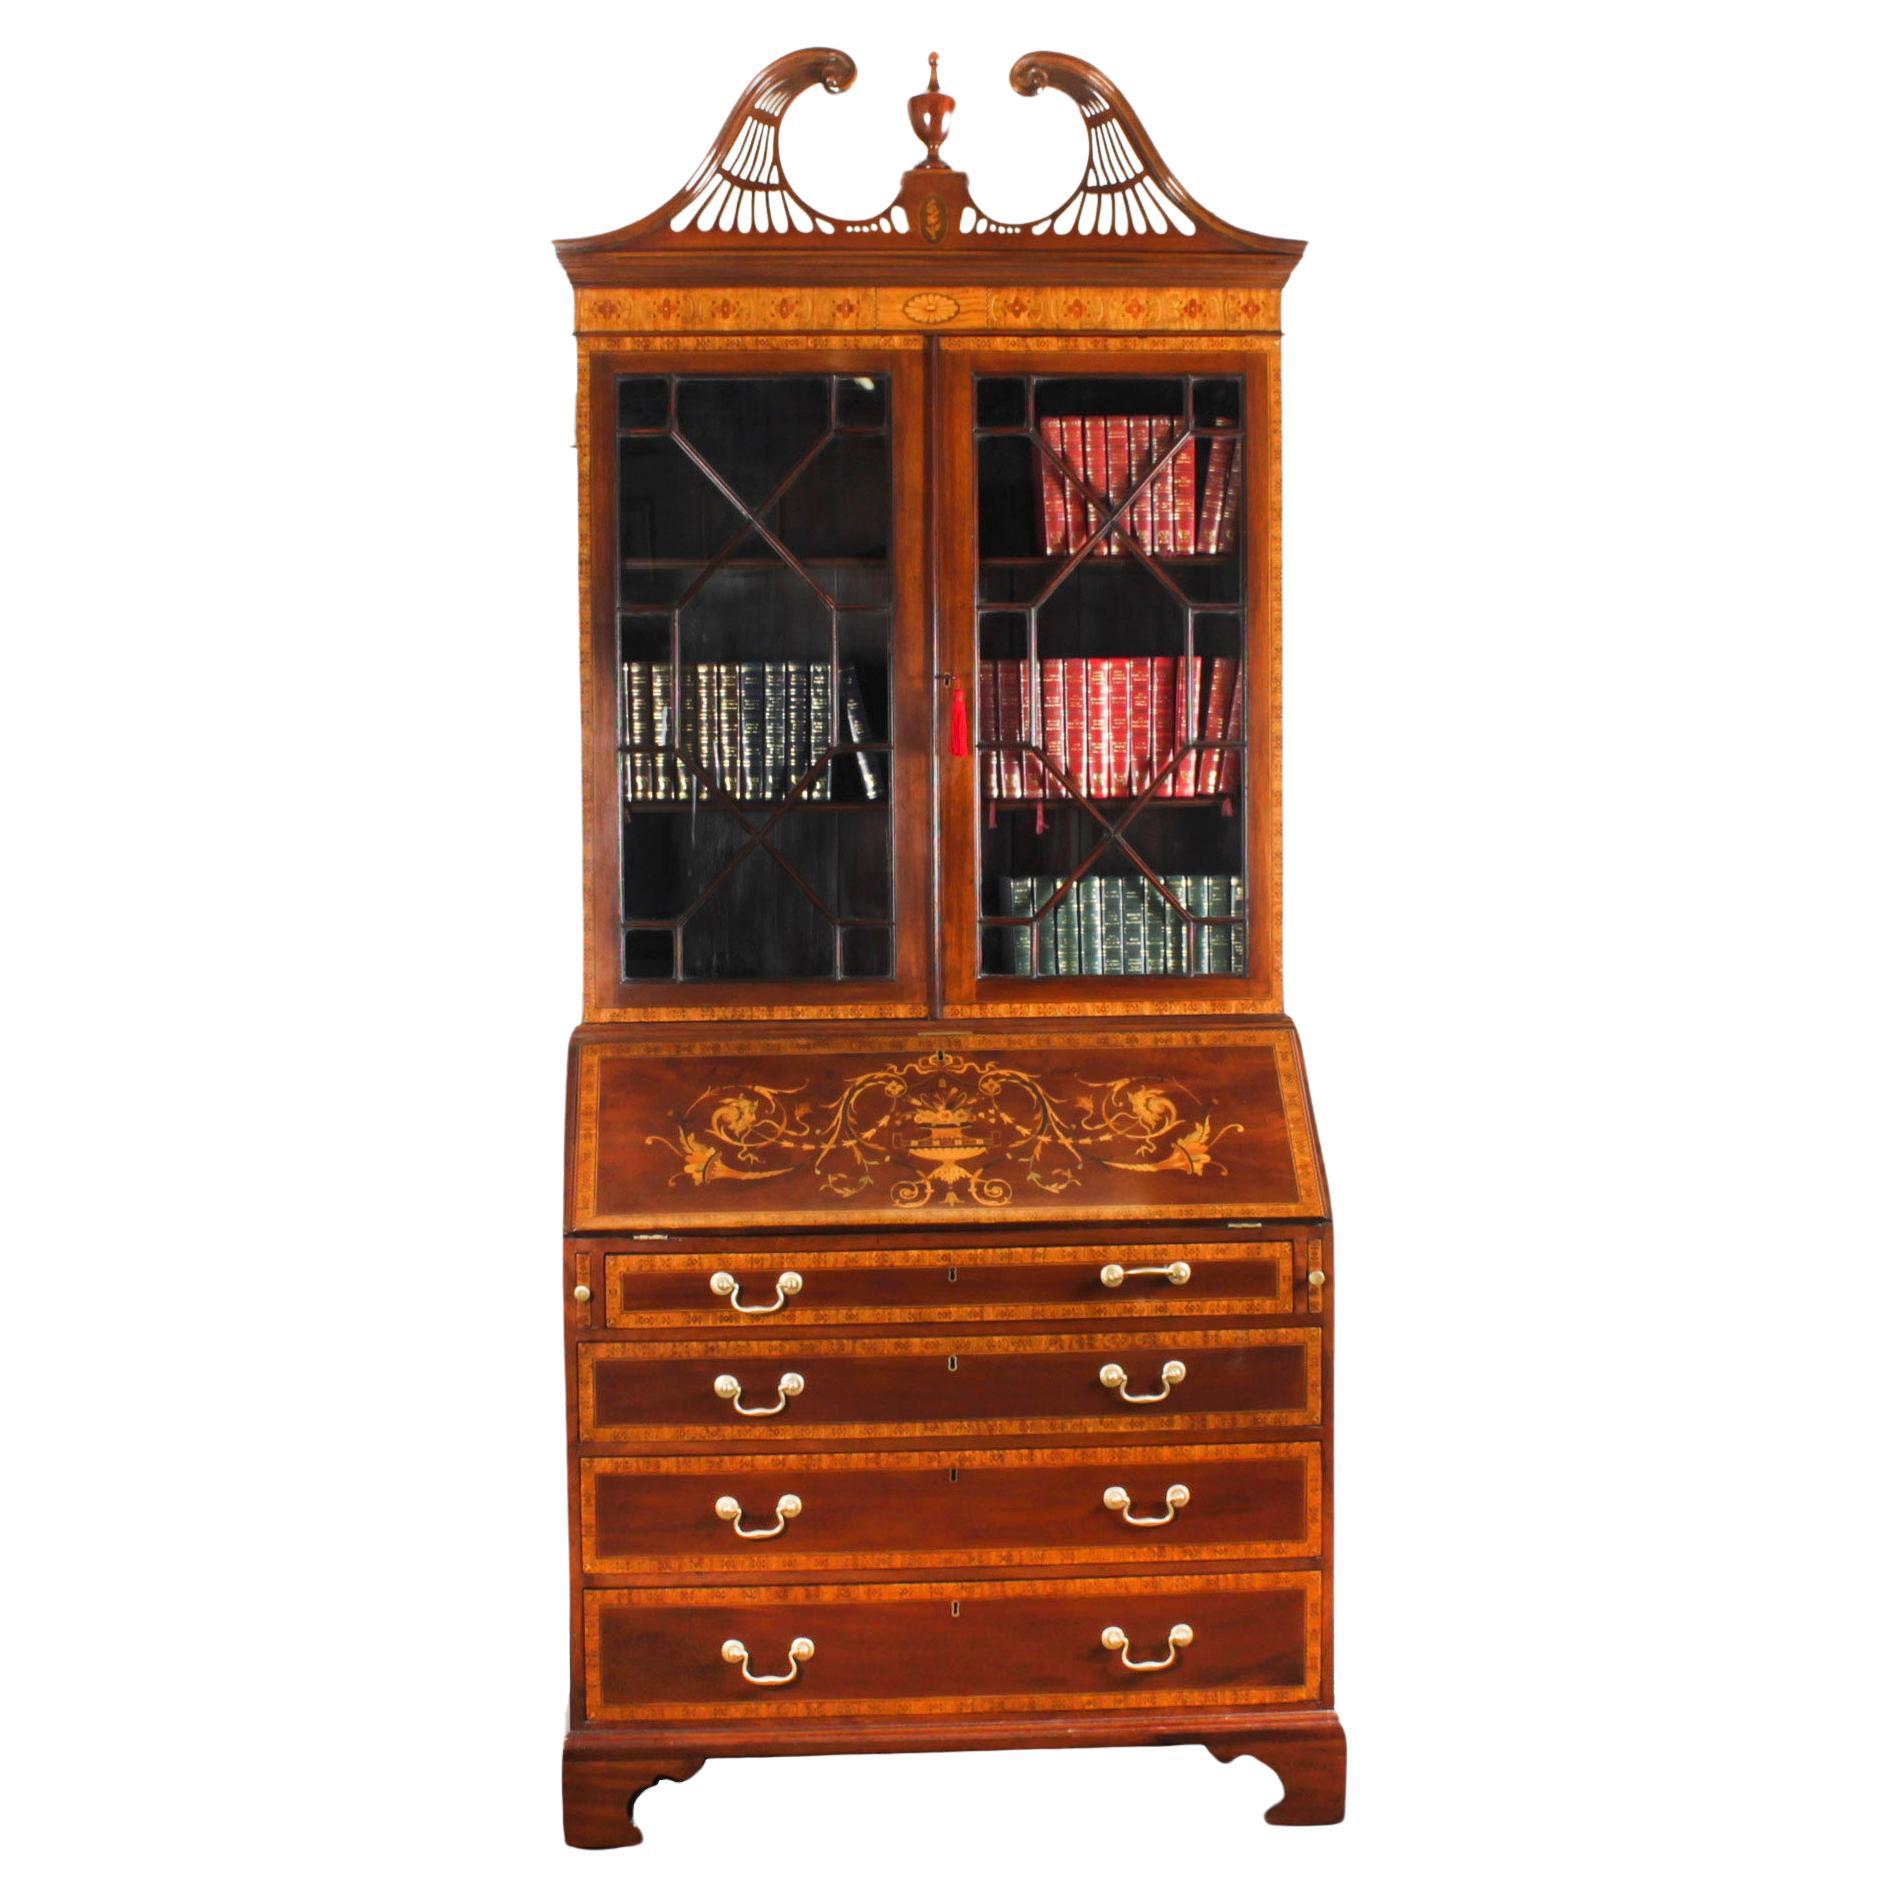 Antique English Flame Mahogany Bureau Bookcase 19th Century